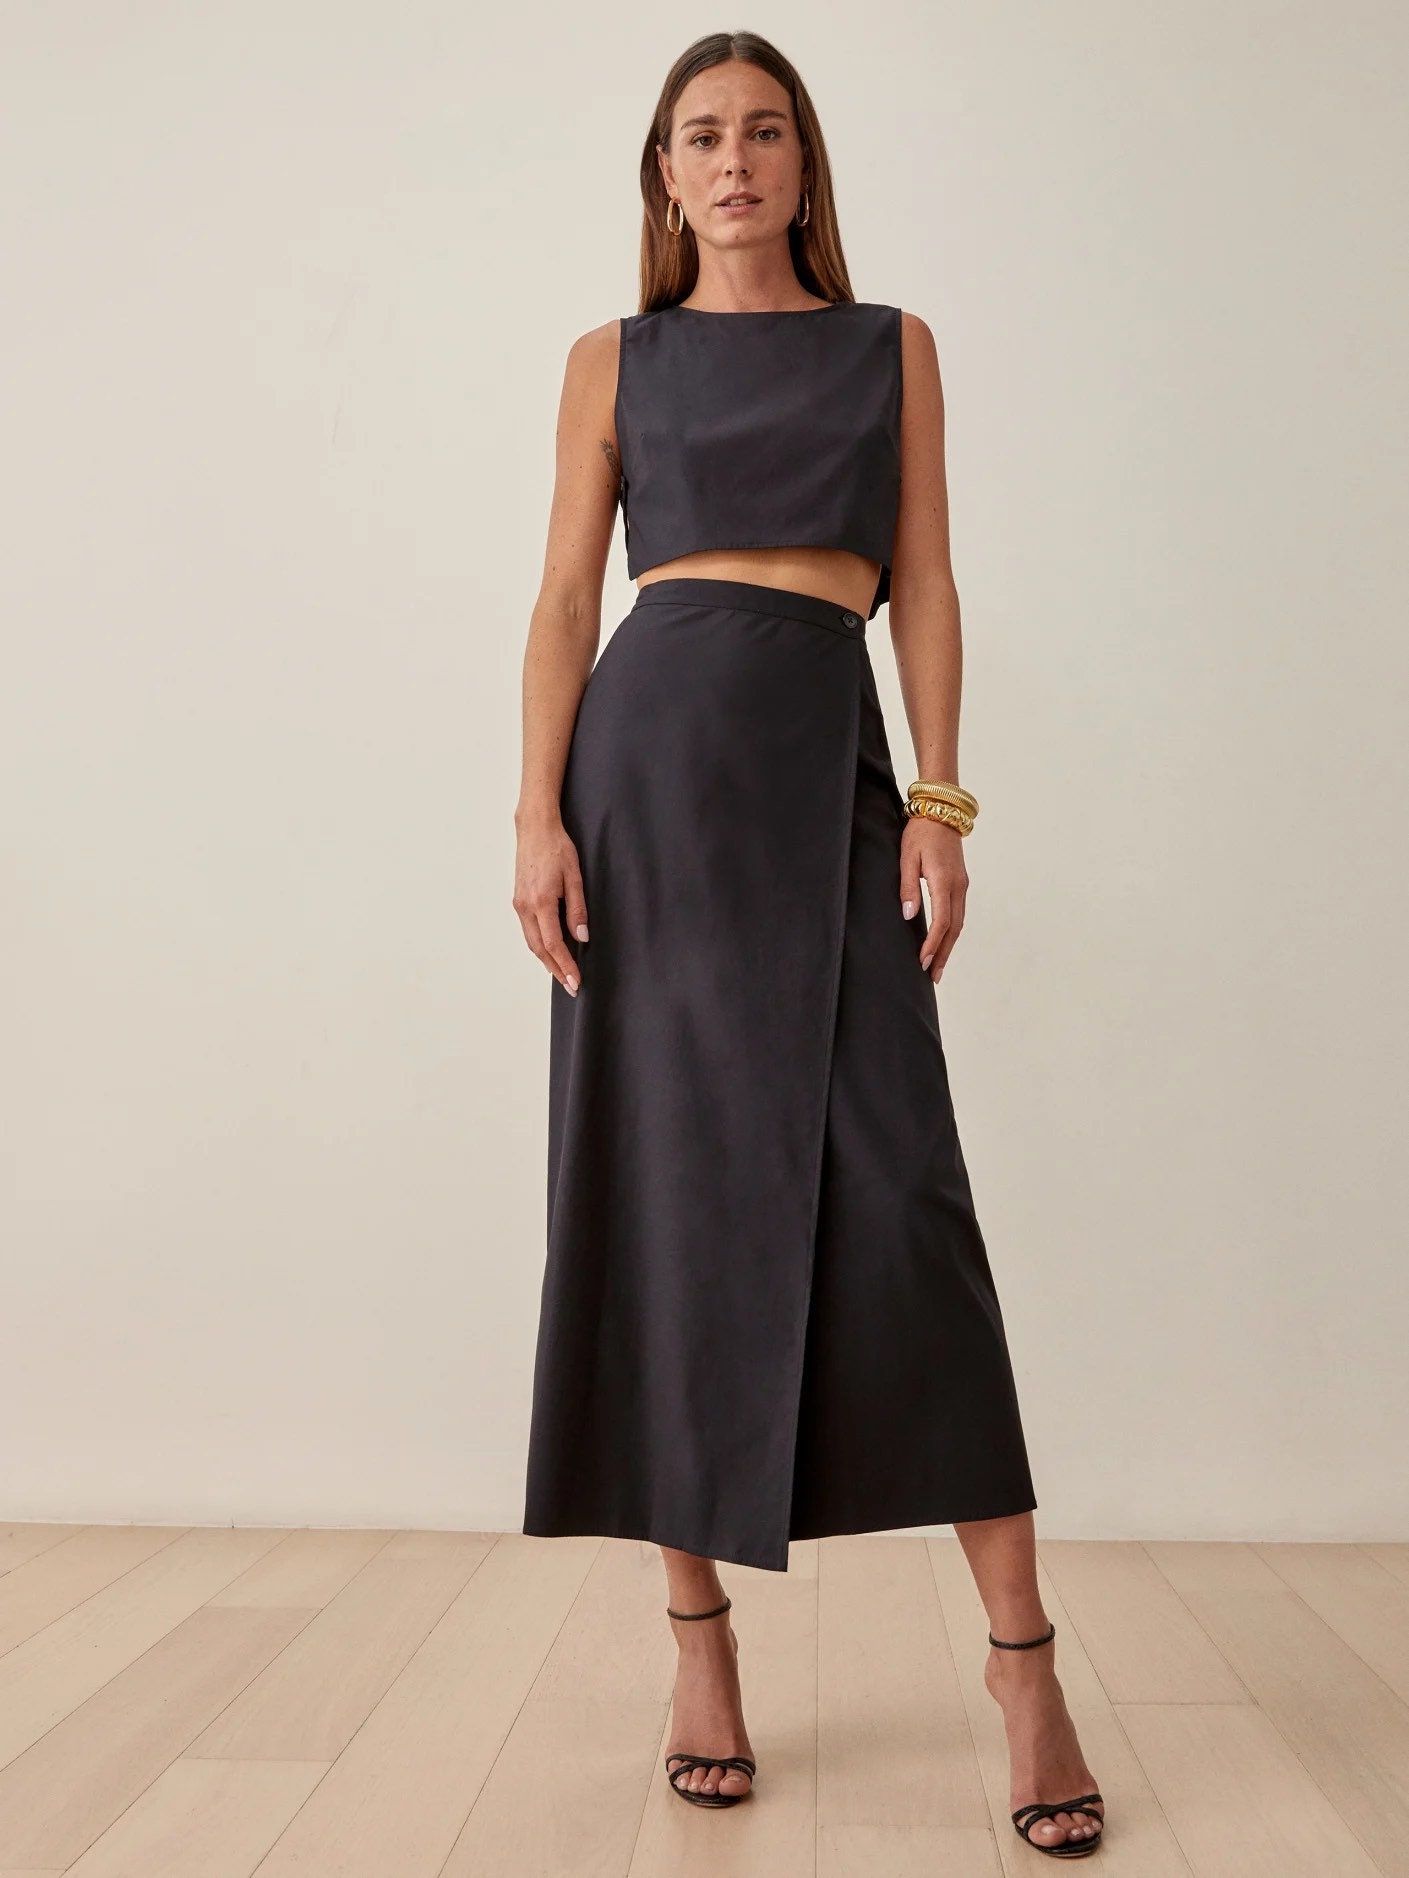 Wrap Around Skirts: Effortless Elegance with Versatile Style